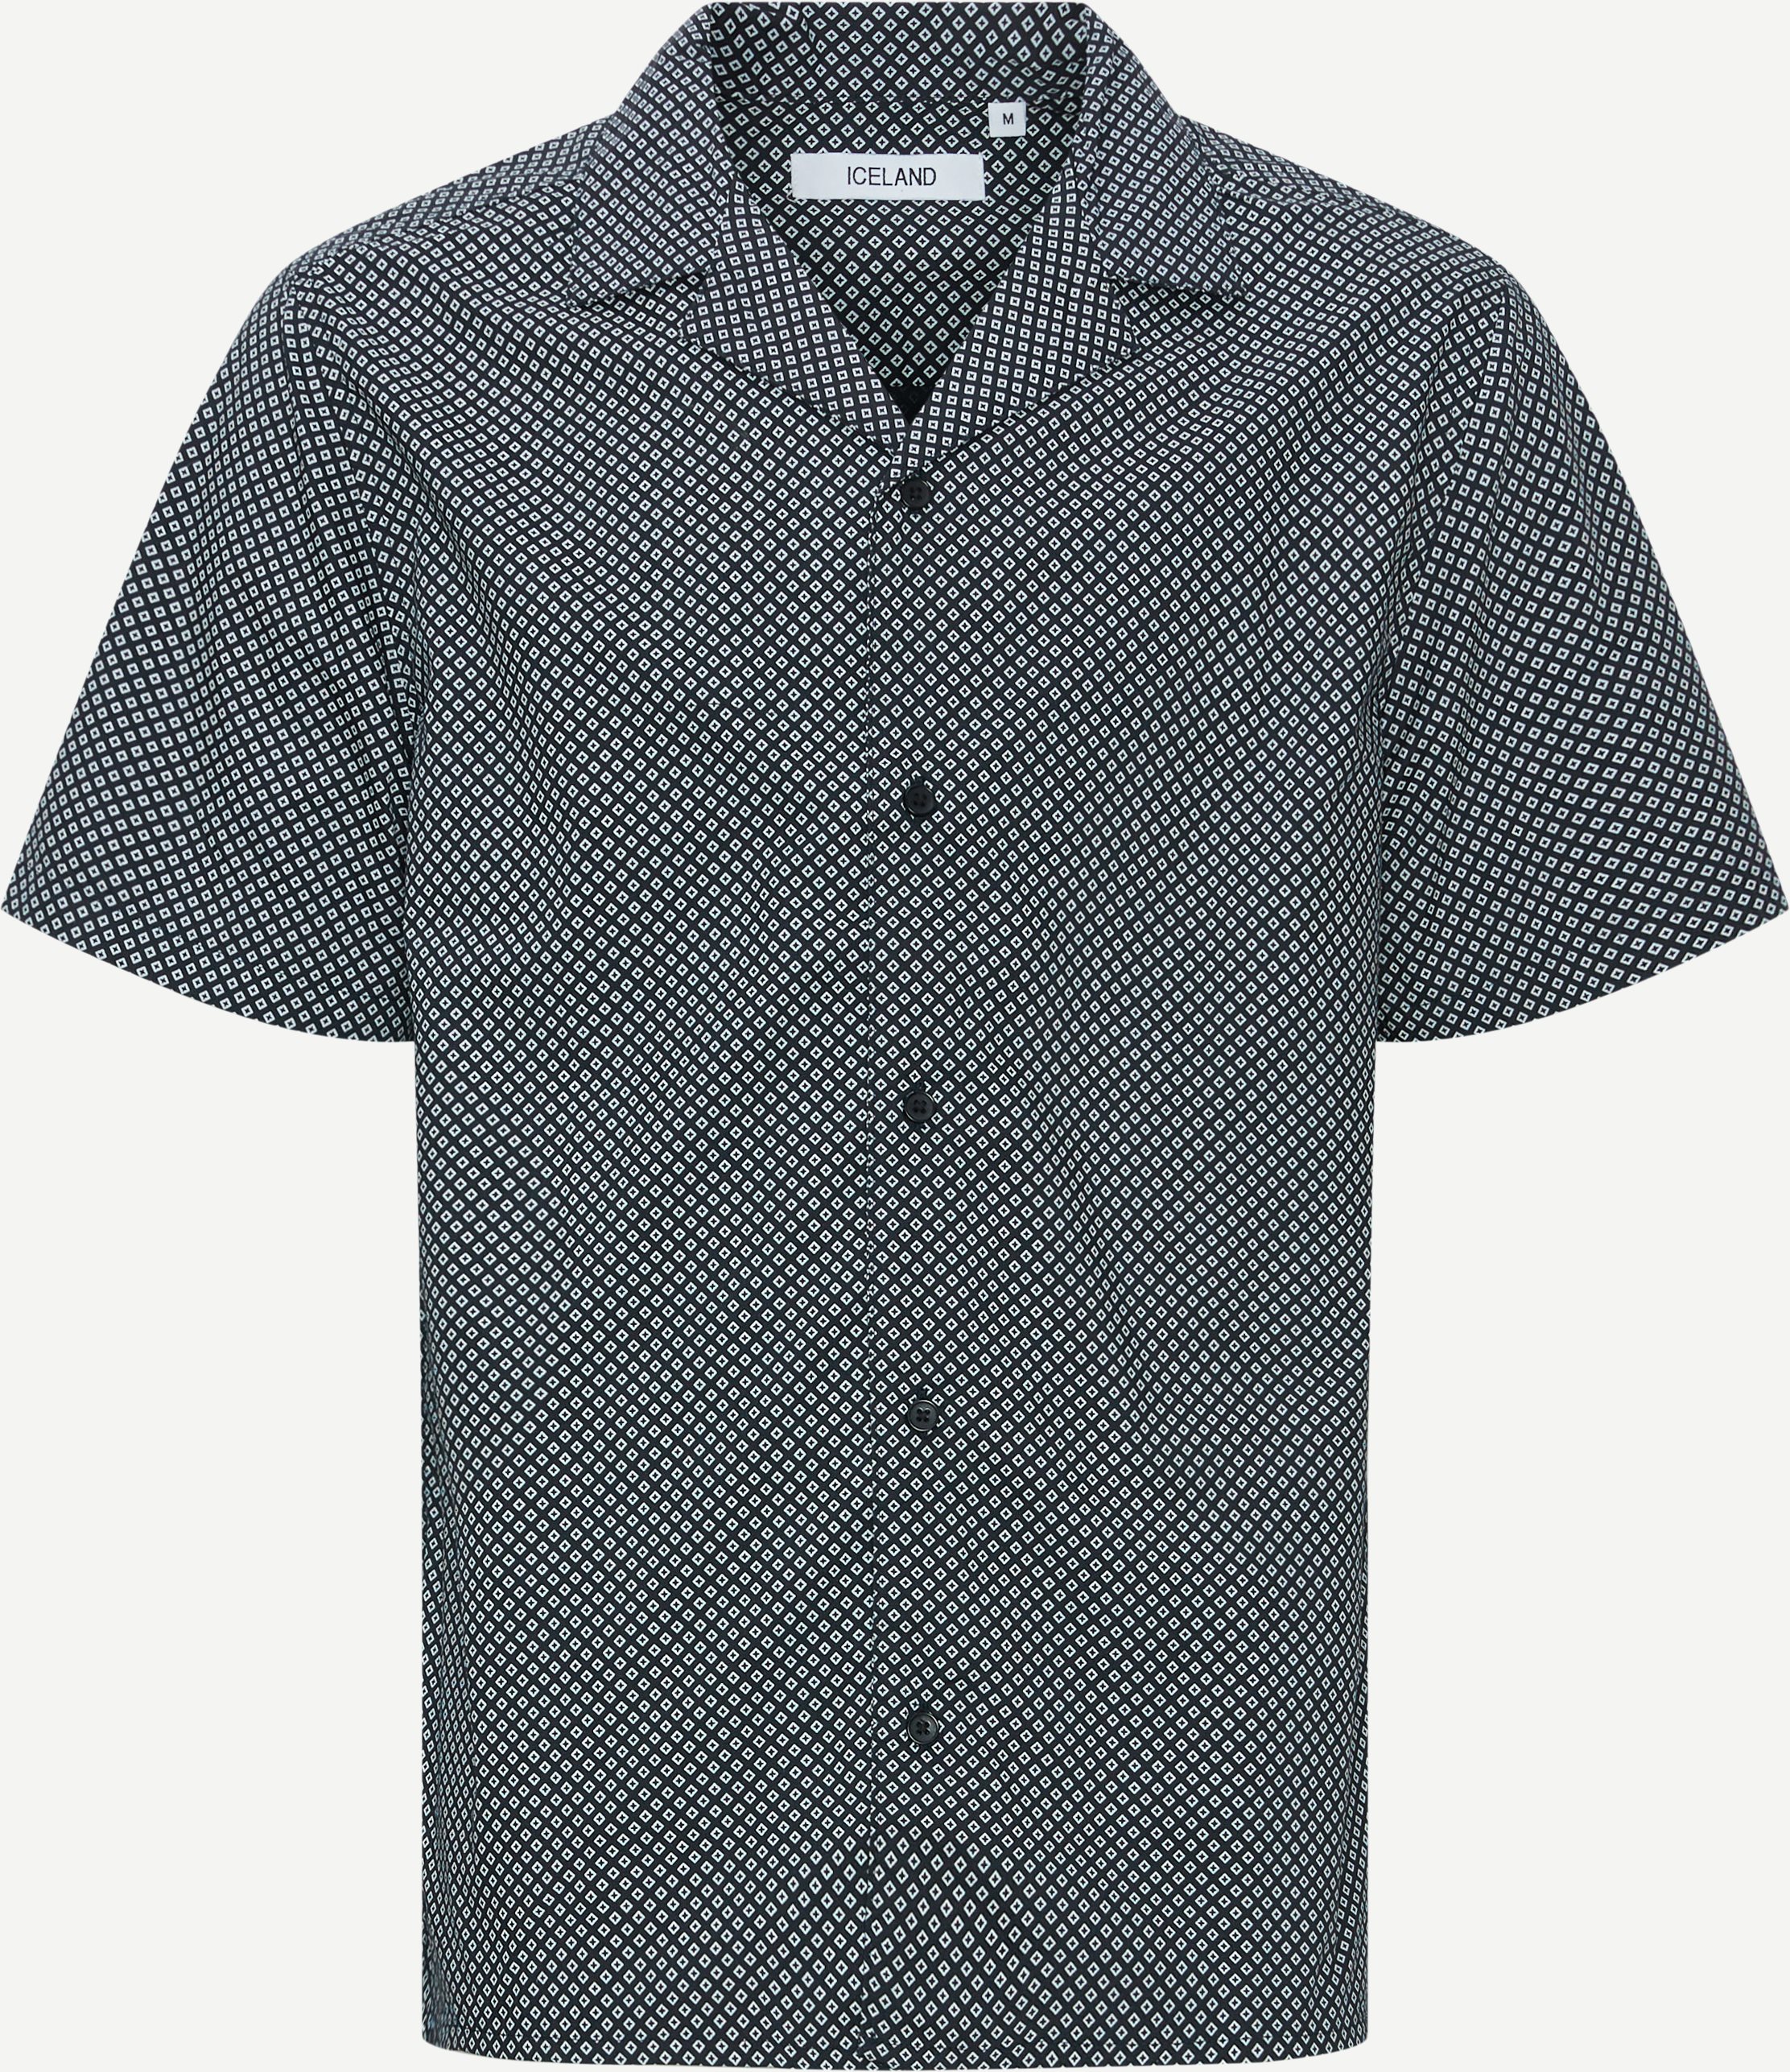 ICELAND Short-sleeved shirts CASTEL Black